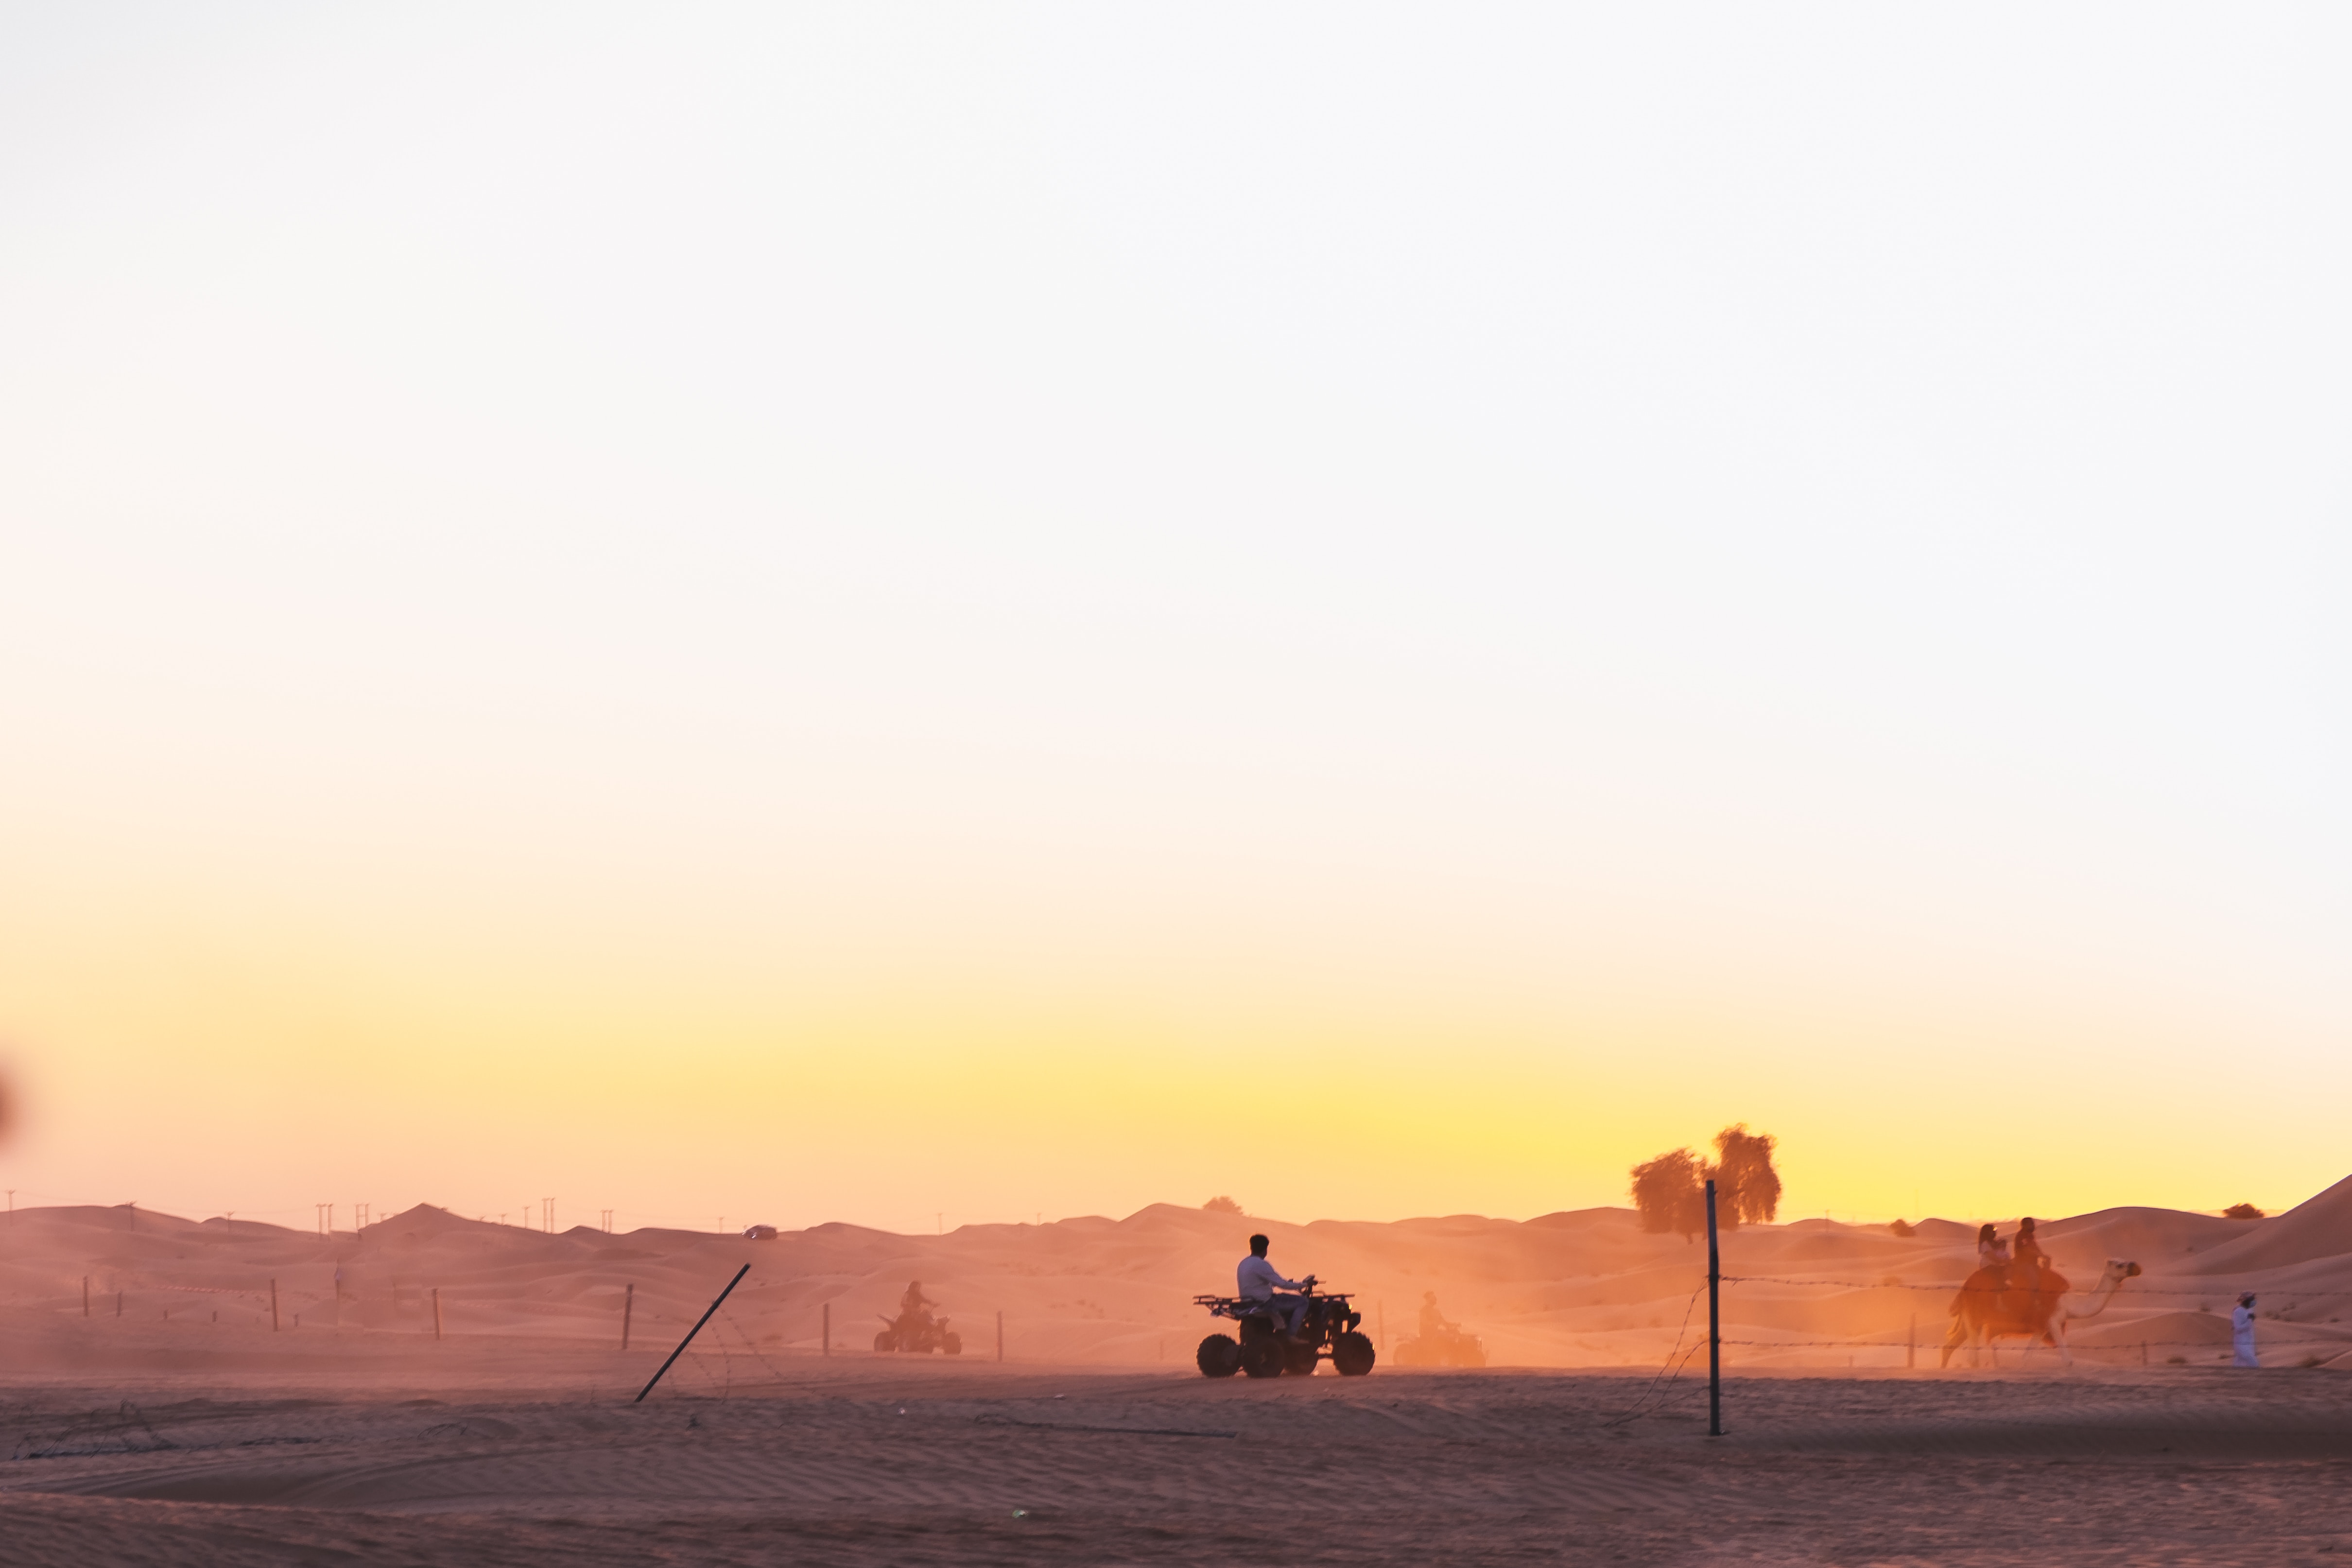 Desert Safari Tour with 4x4 Vehicles